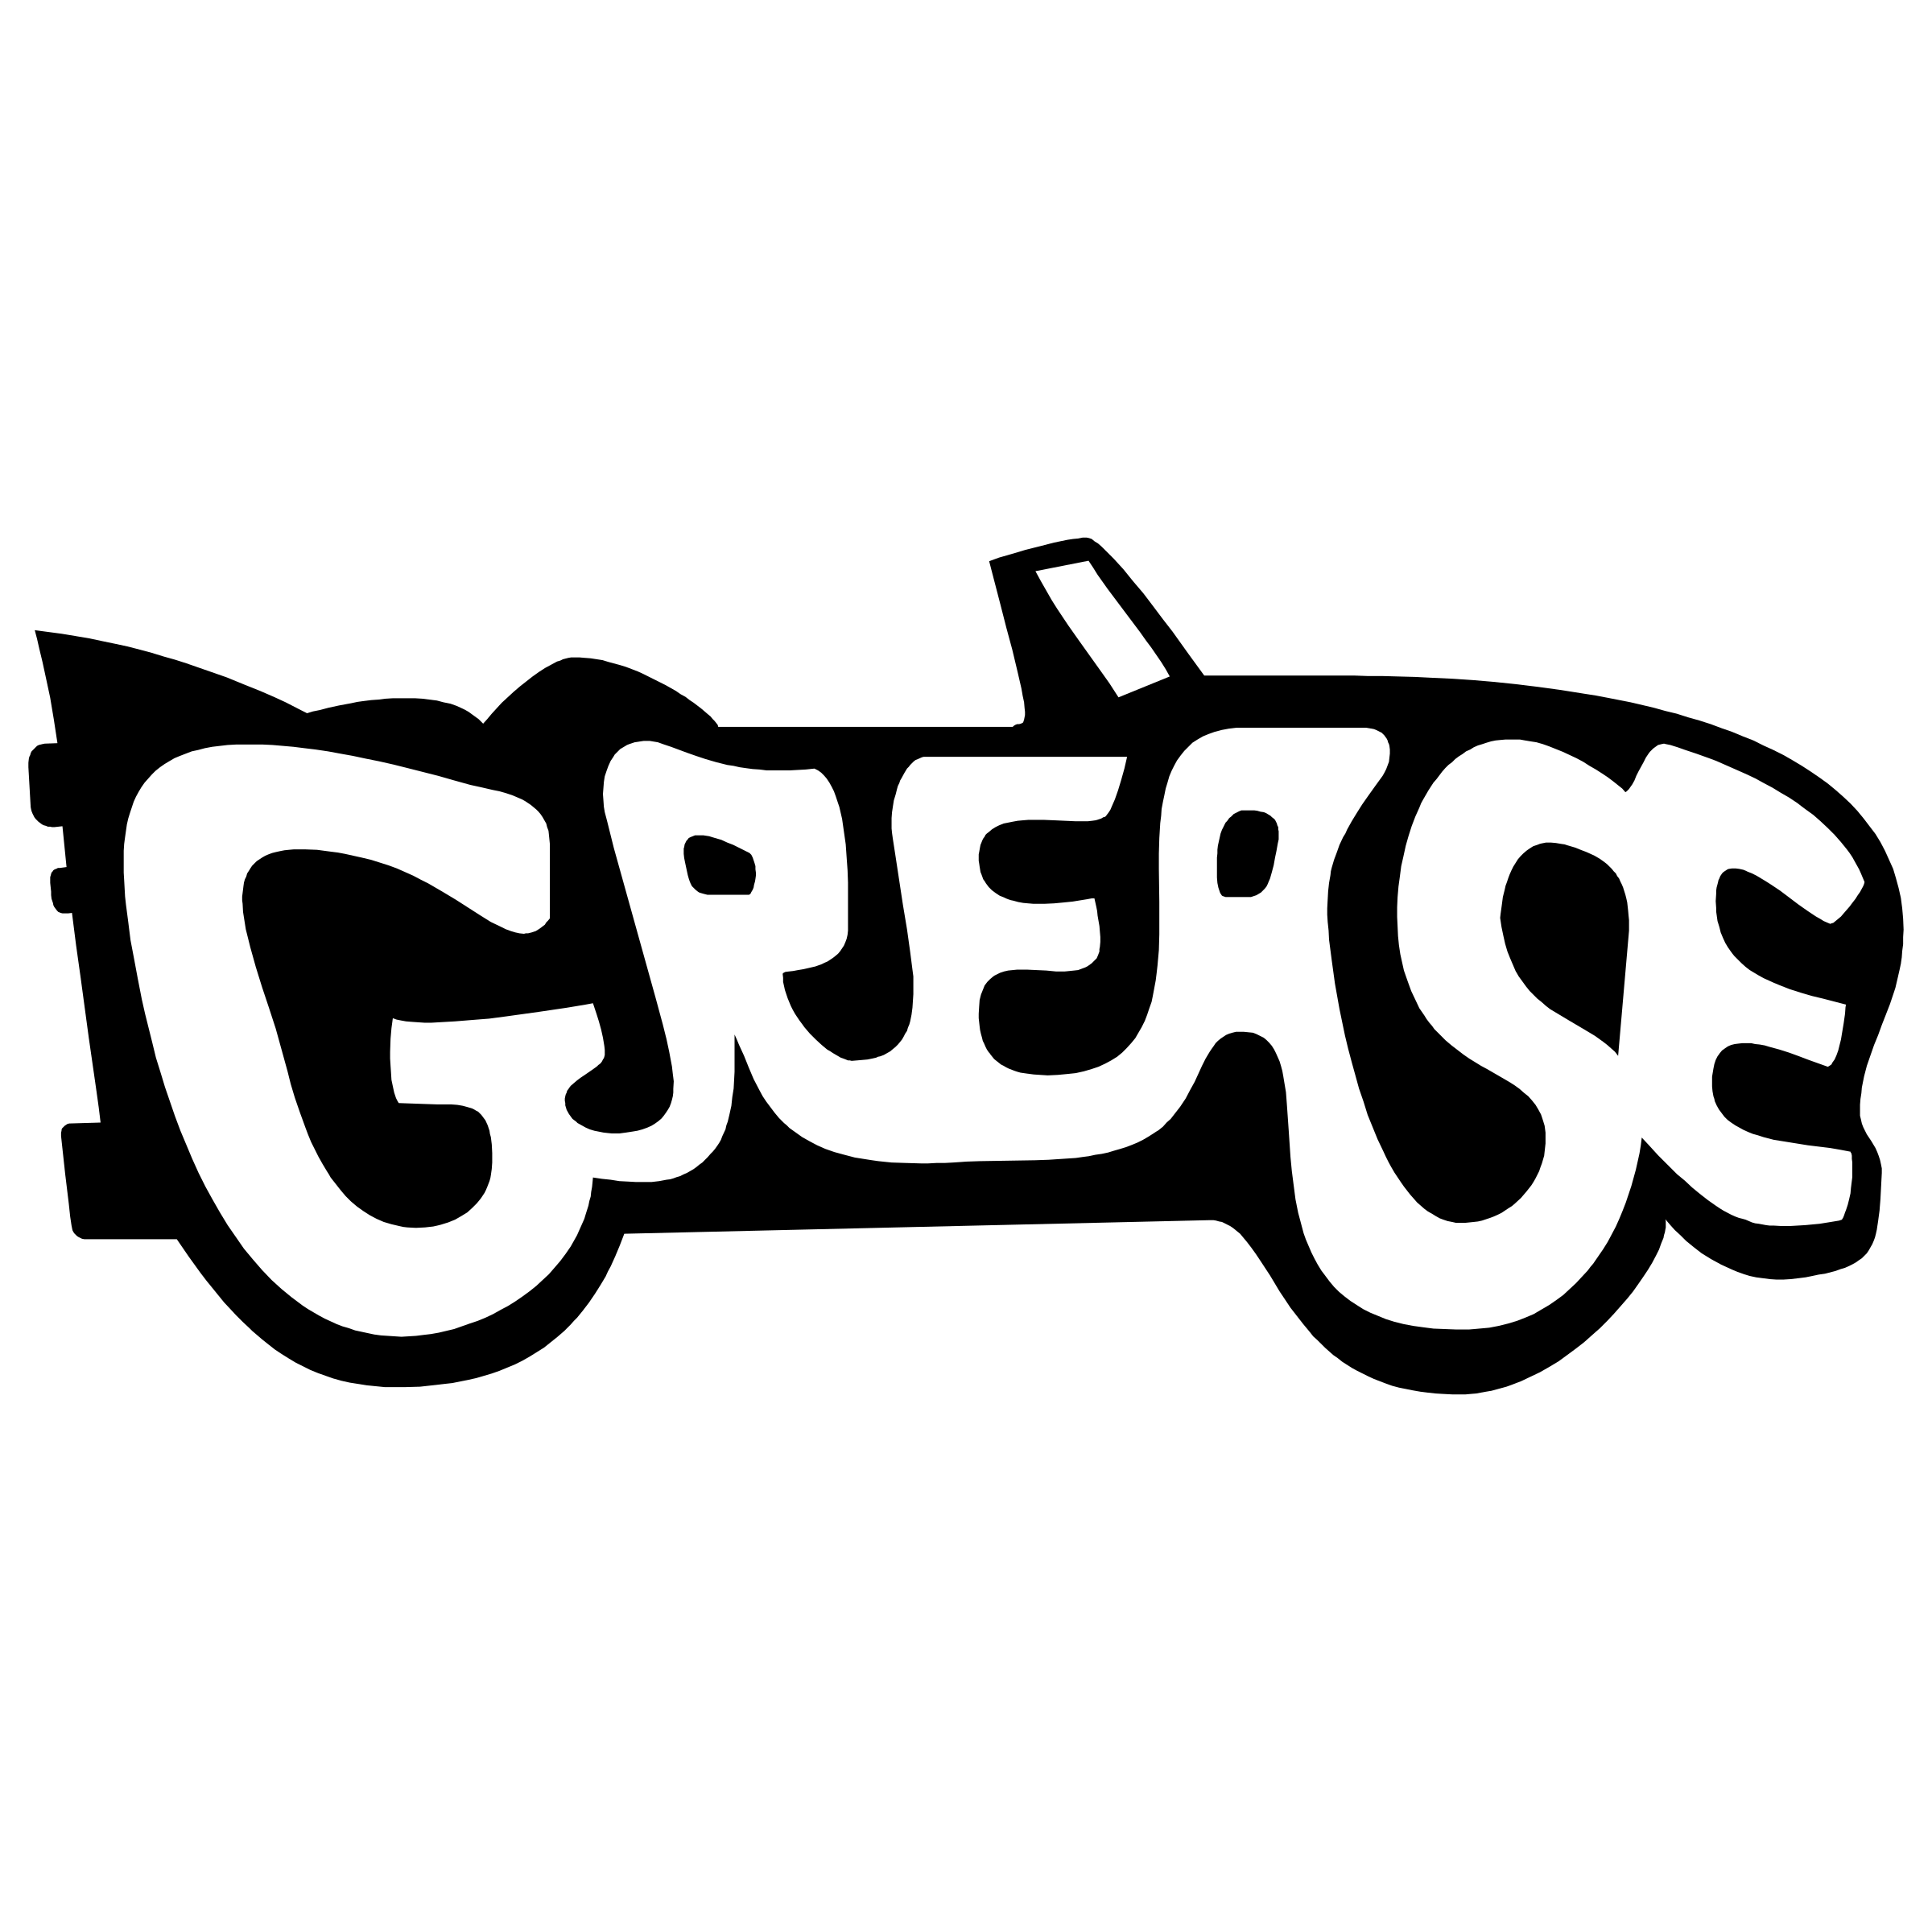 Grease Logo - Grease Logo PNG Transparent & SVG Vector